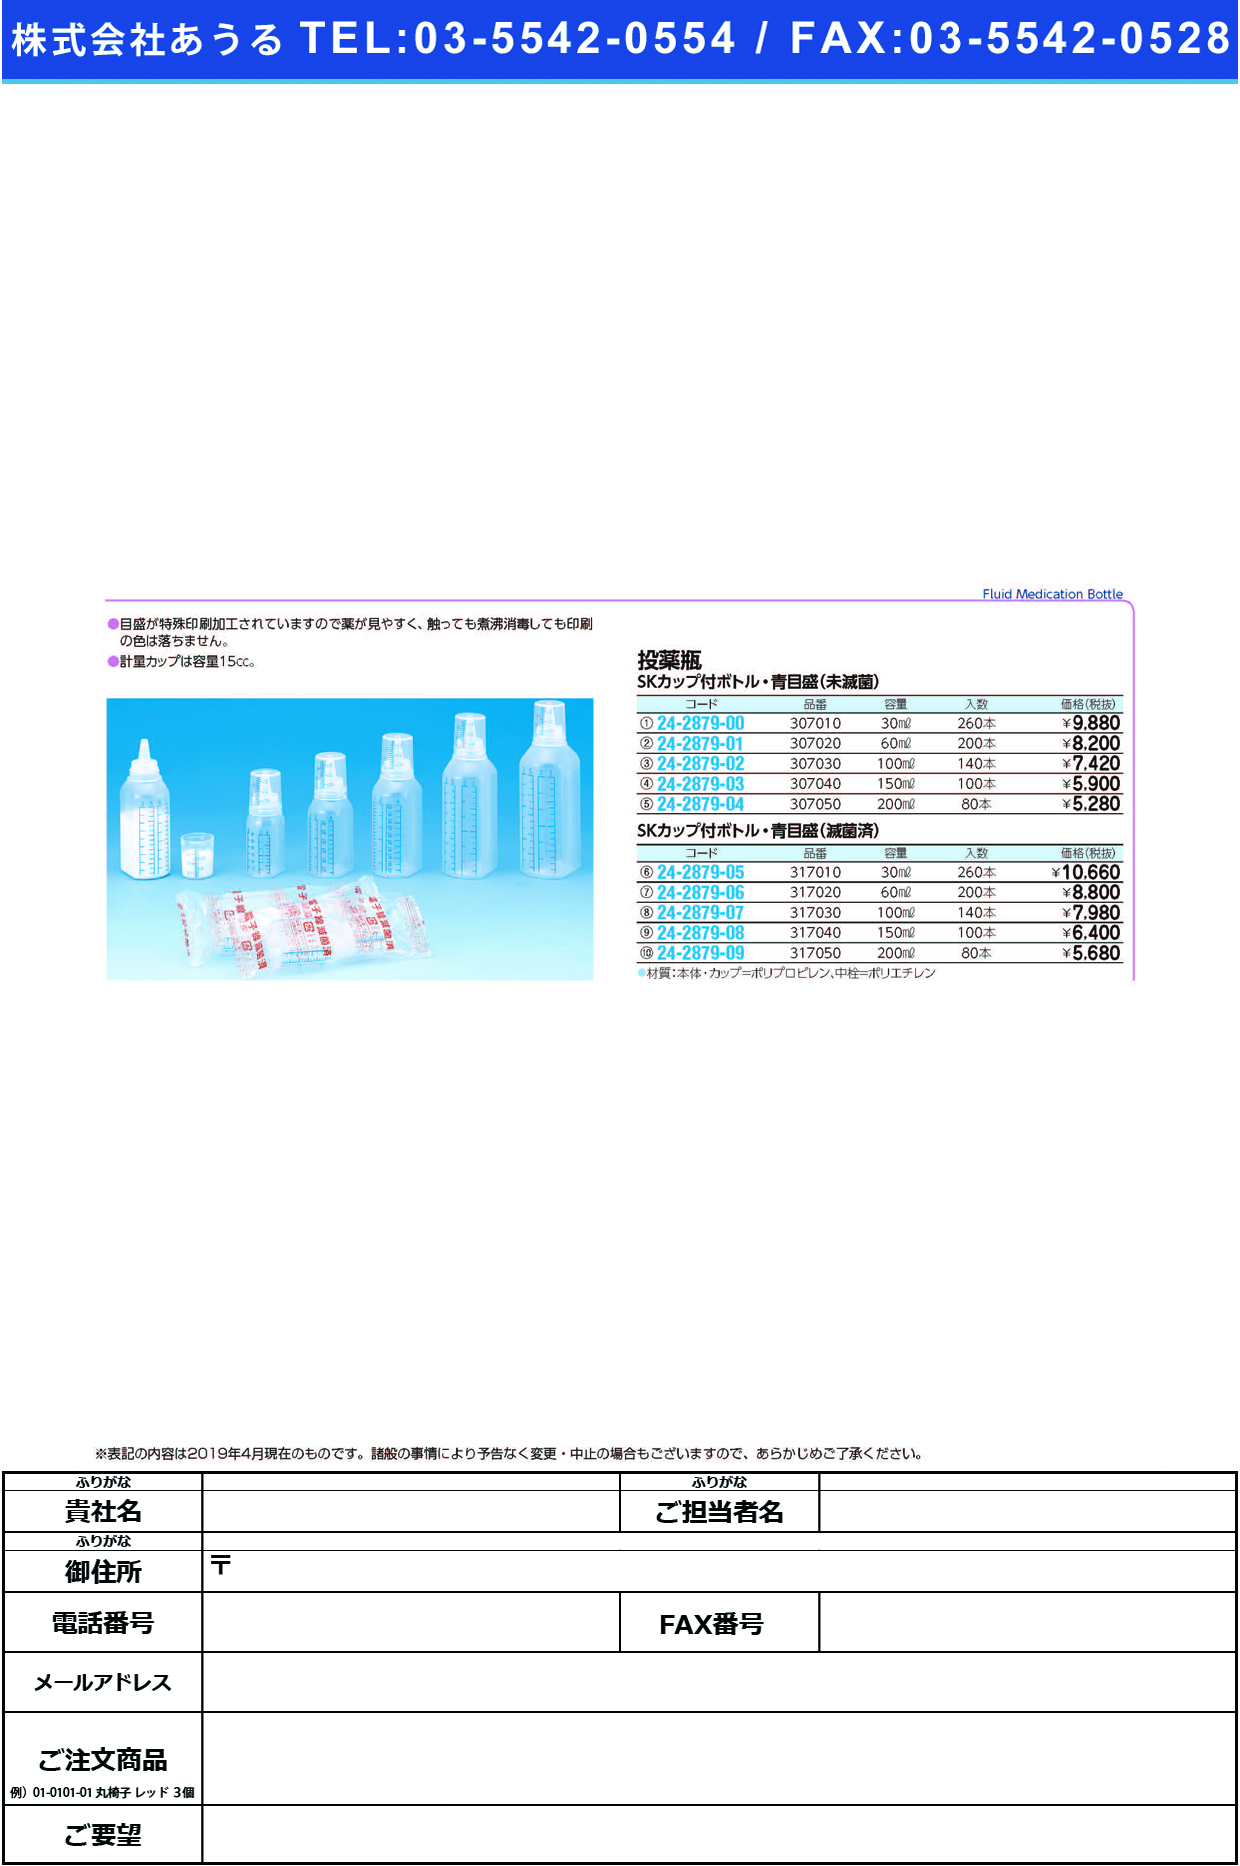 (24-2879-00)ＳＫカップ付ボトル青目盛（未滅菌） 30ML(260ﾎﾝｲﾘ) SKｶｯﾌﾟﾂｷﾎﾞﾄﾙﾐﾒｯｷﾝ【1袋単位】【2019年カタログ商品】